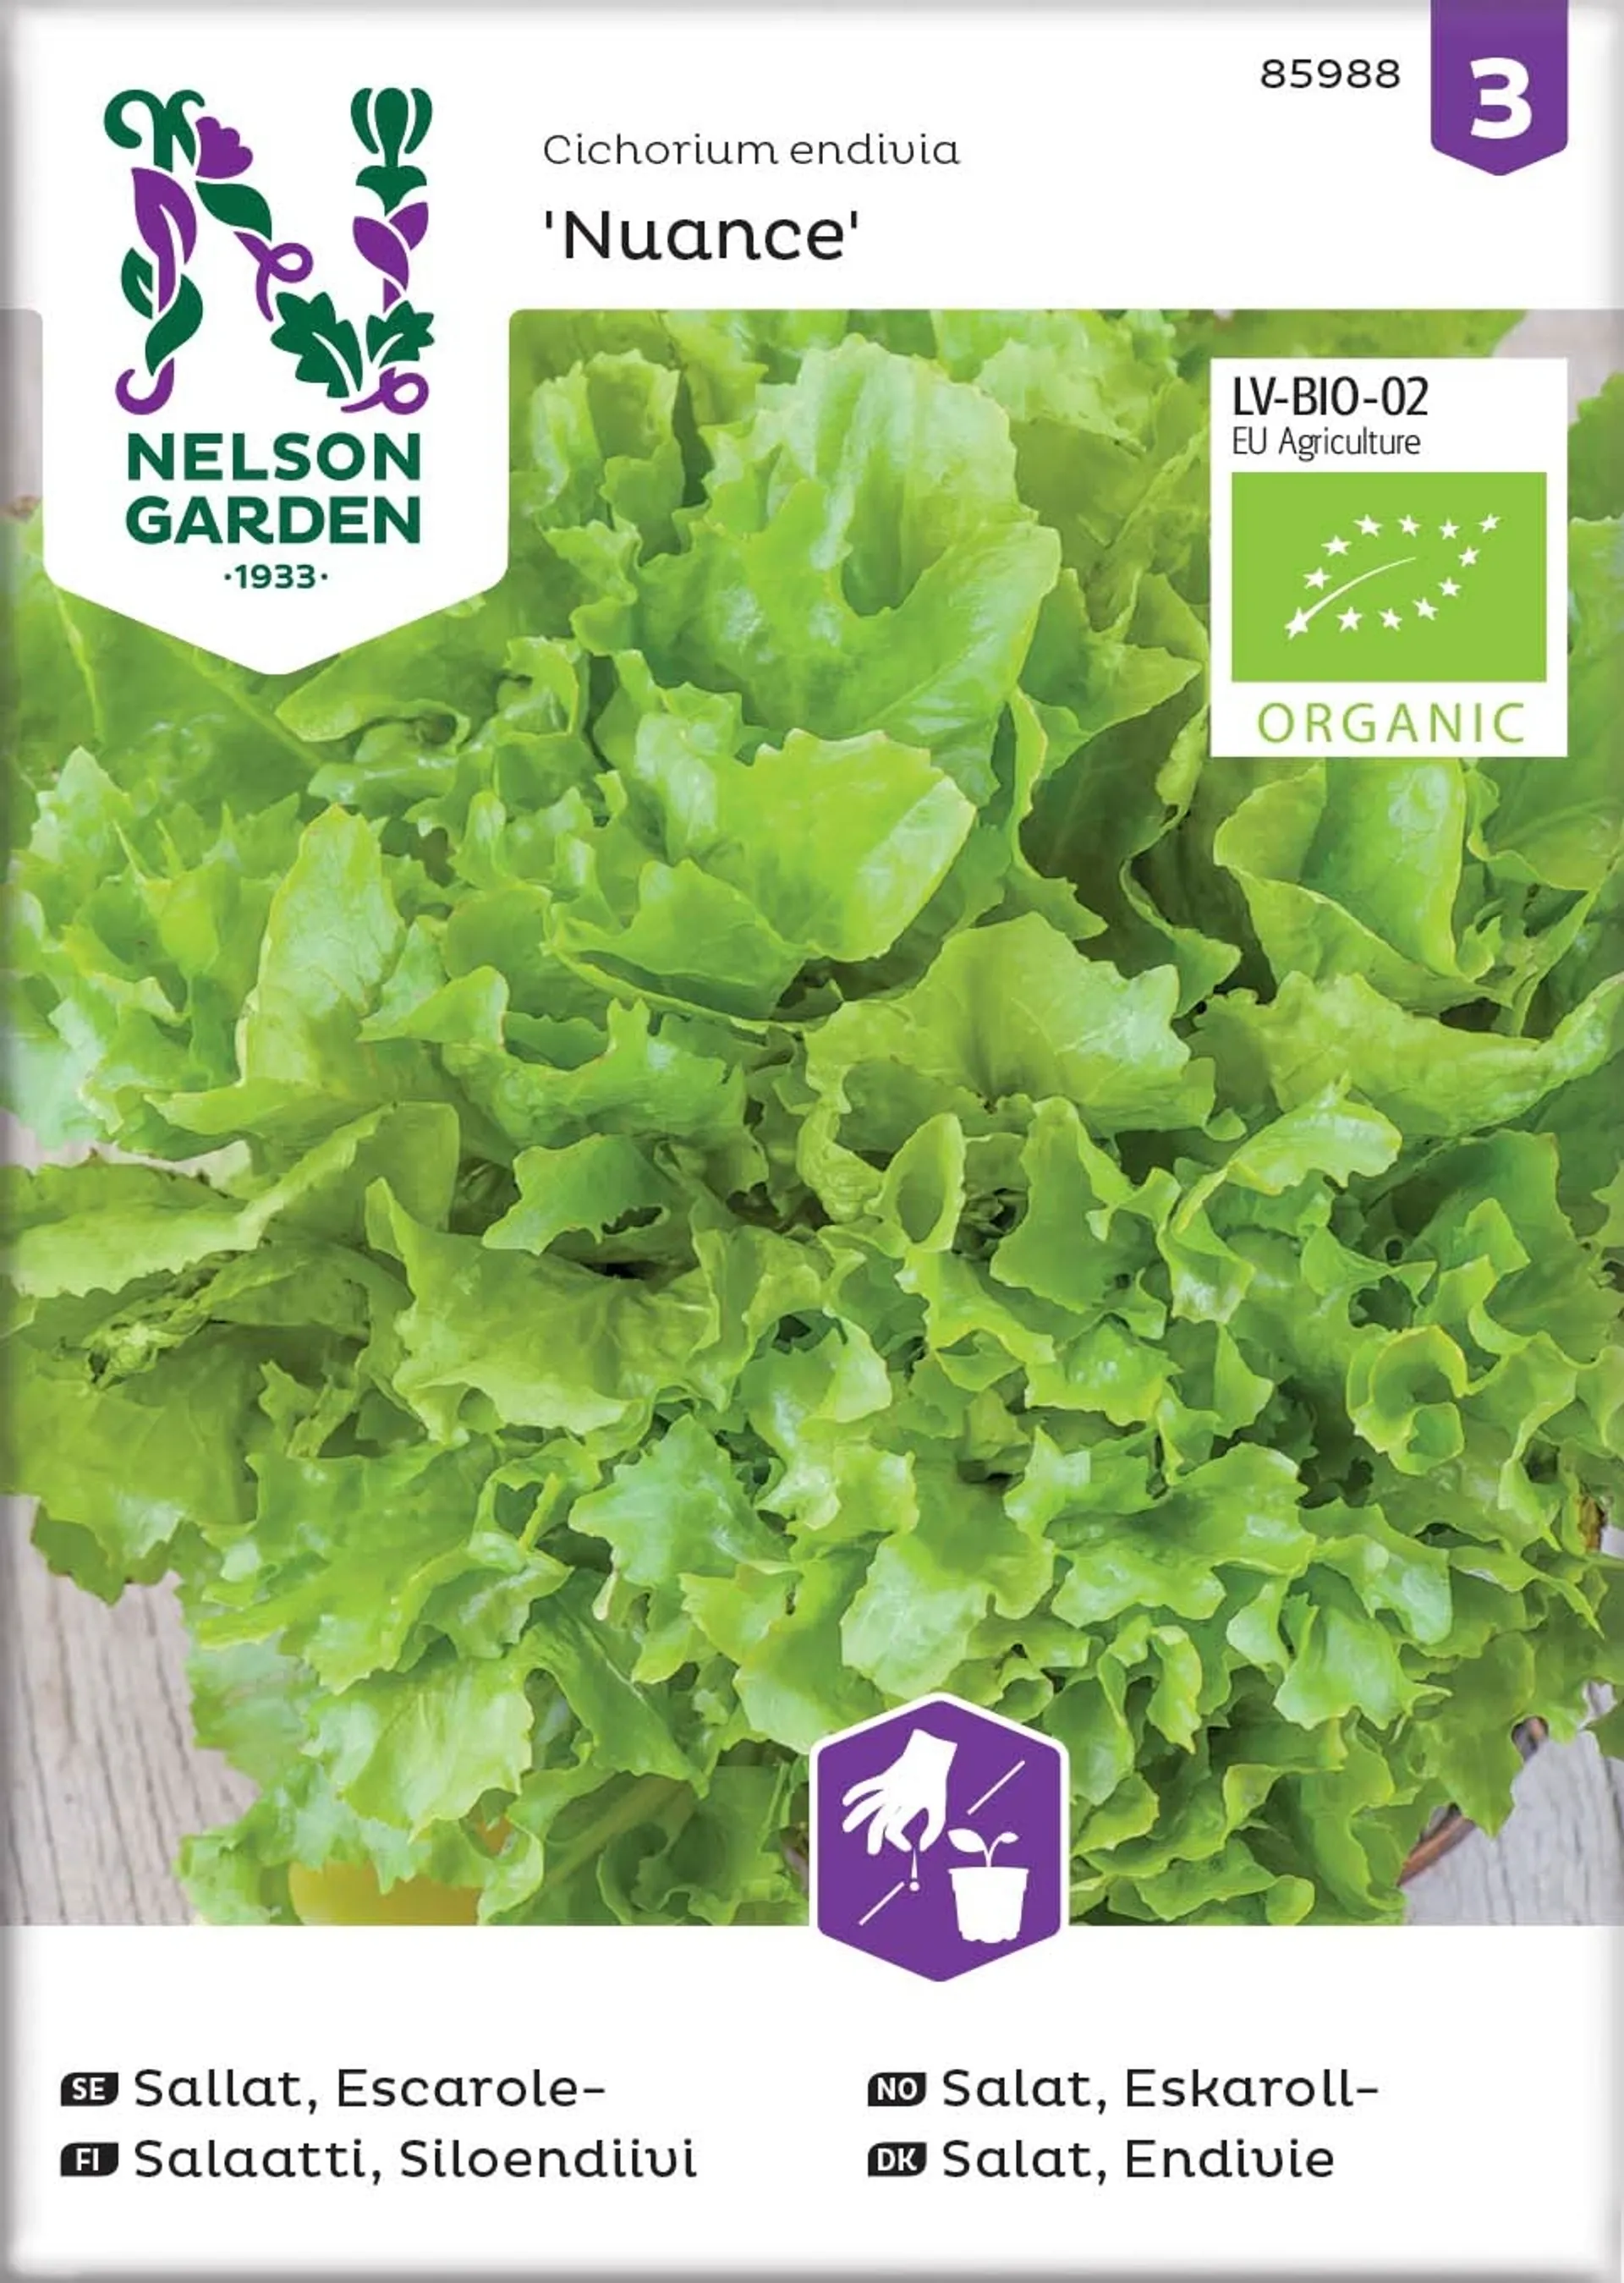 Nelson Garden Siemen Salaatti, Endiivi, Silo-, Nuance, luomu